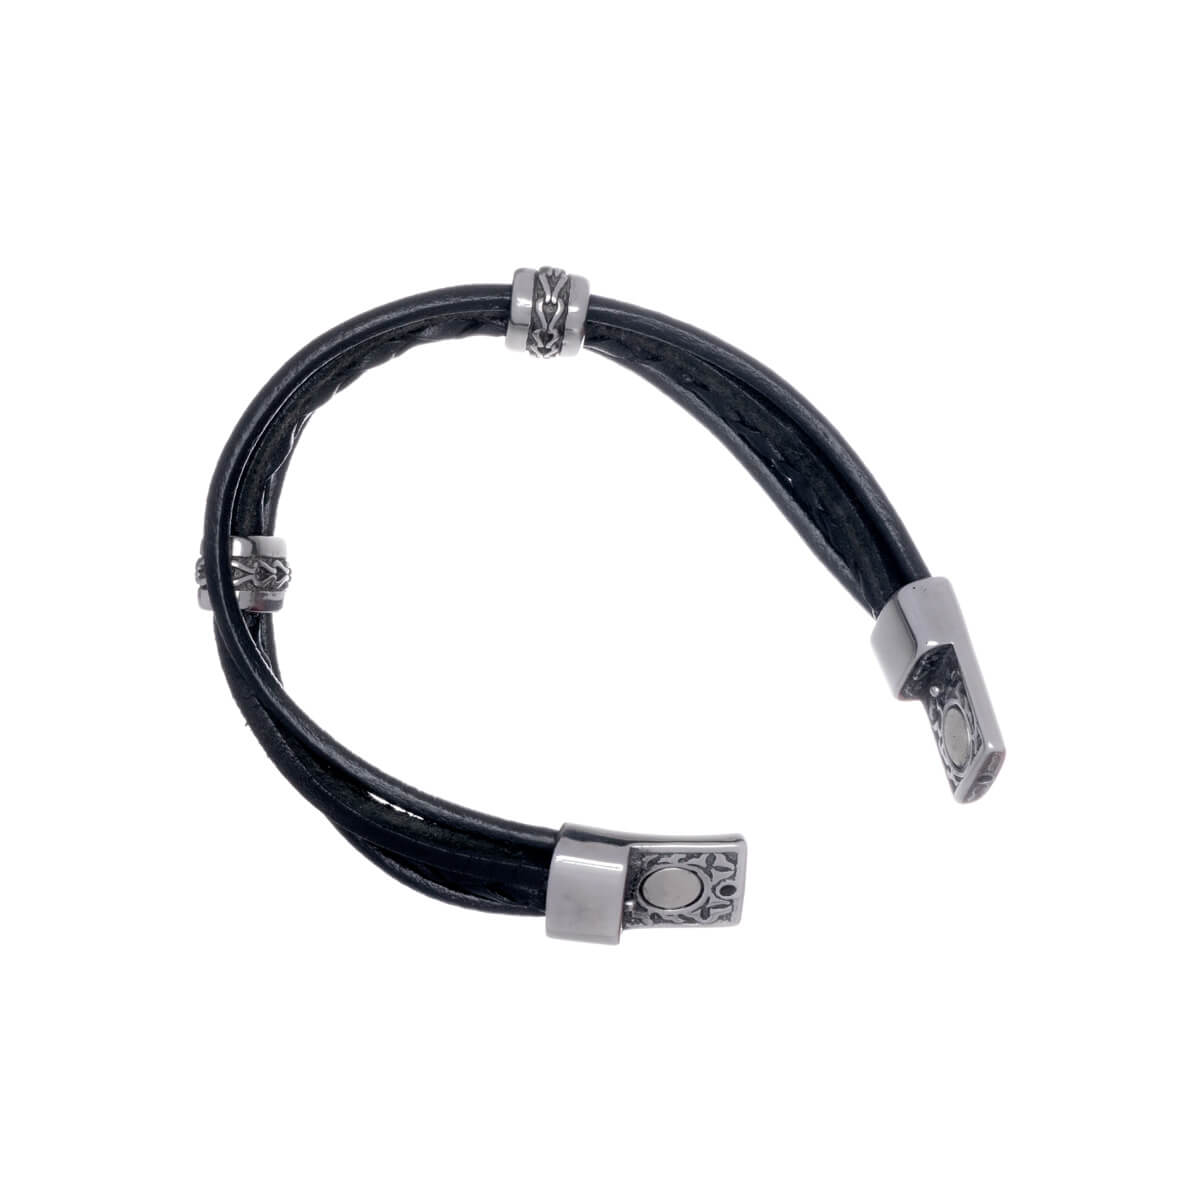 Leather bracelet 20cm (steel)